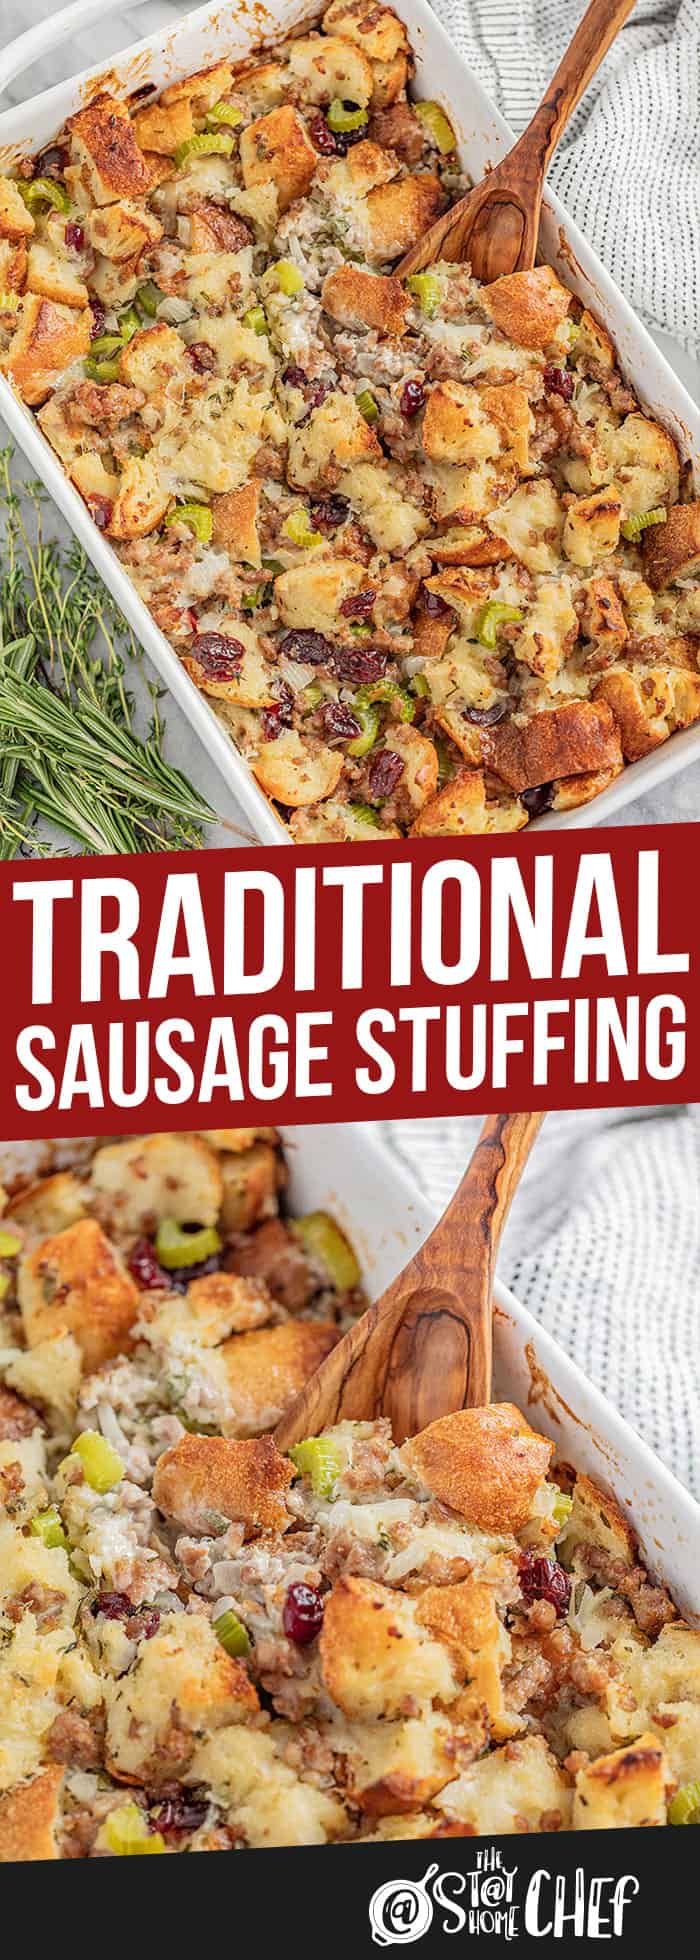 Traditional Sausage Stuffing